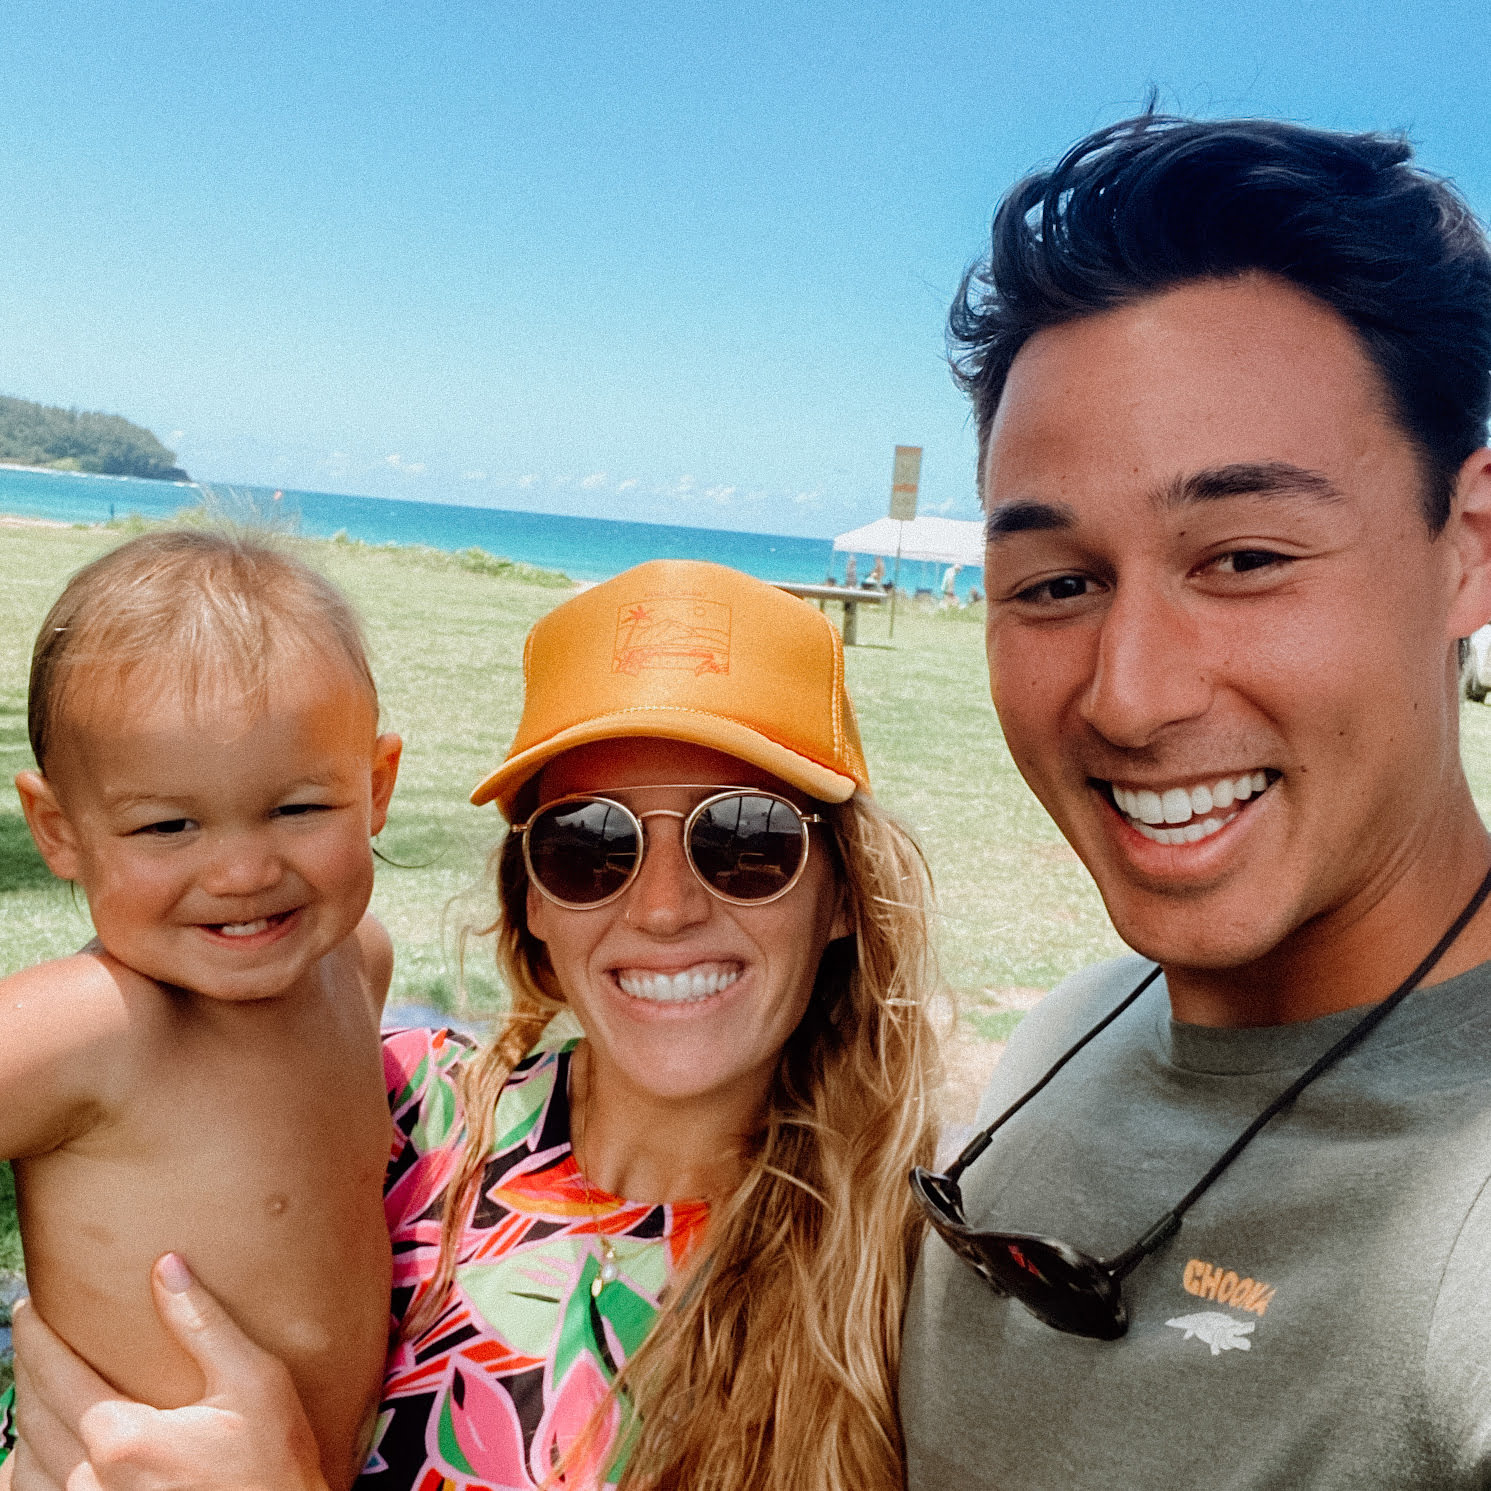 Kate, her husband, and son on their trip to Kauai